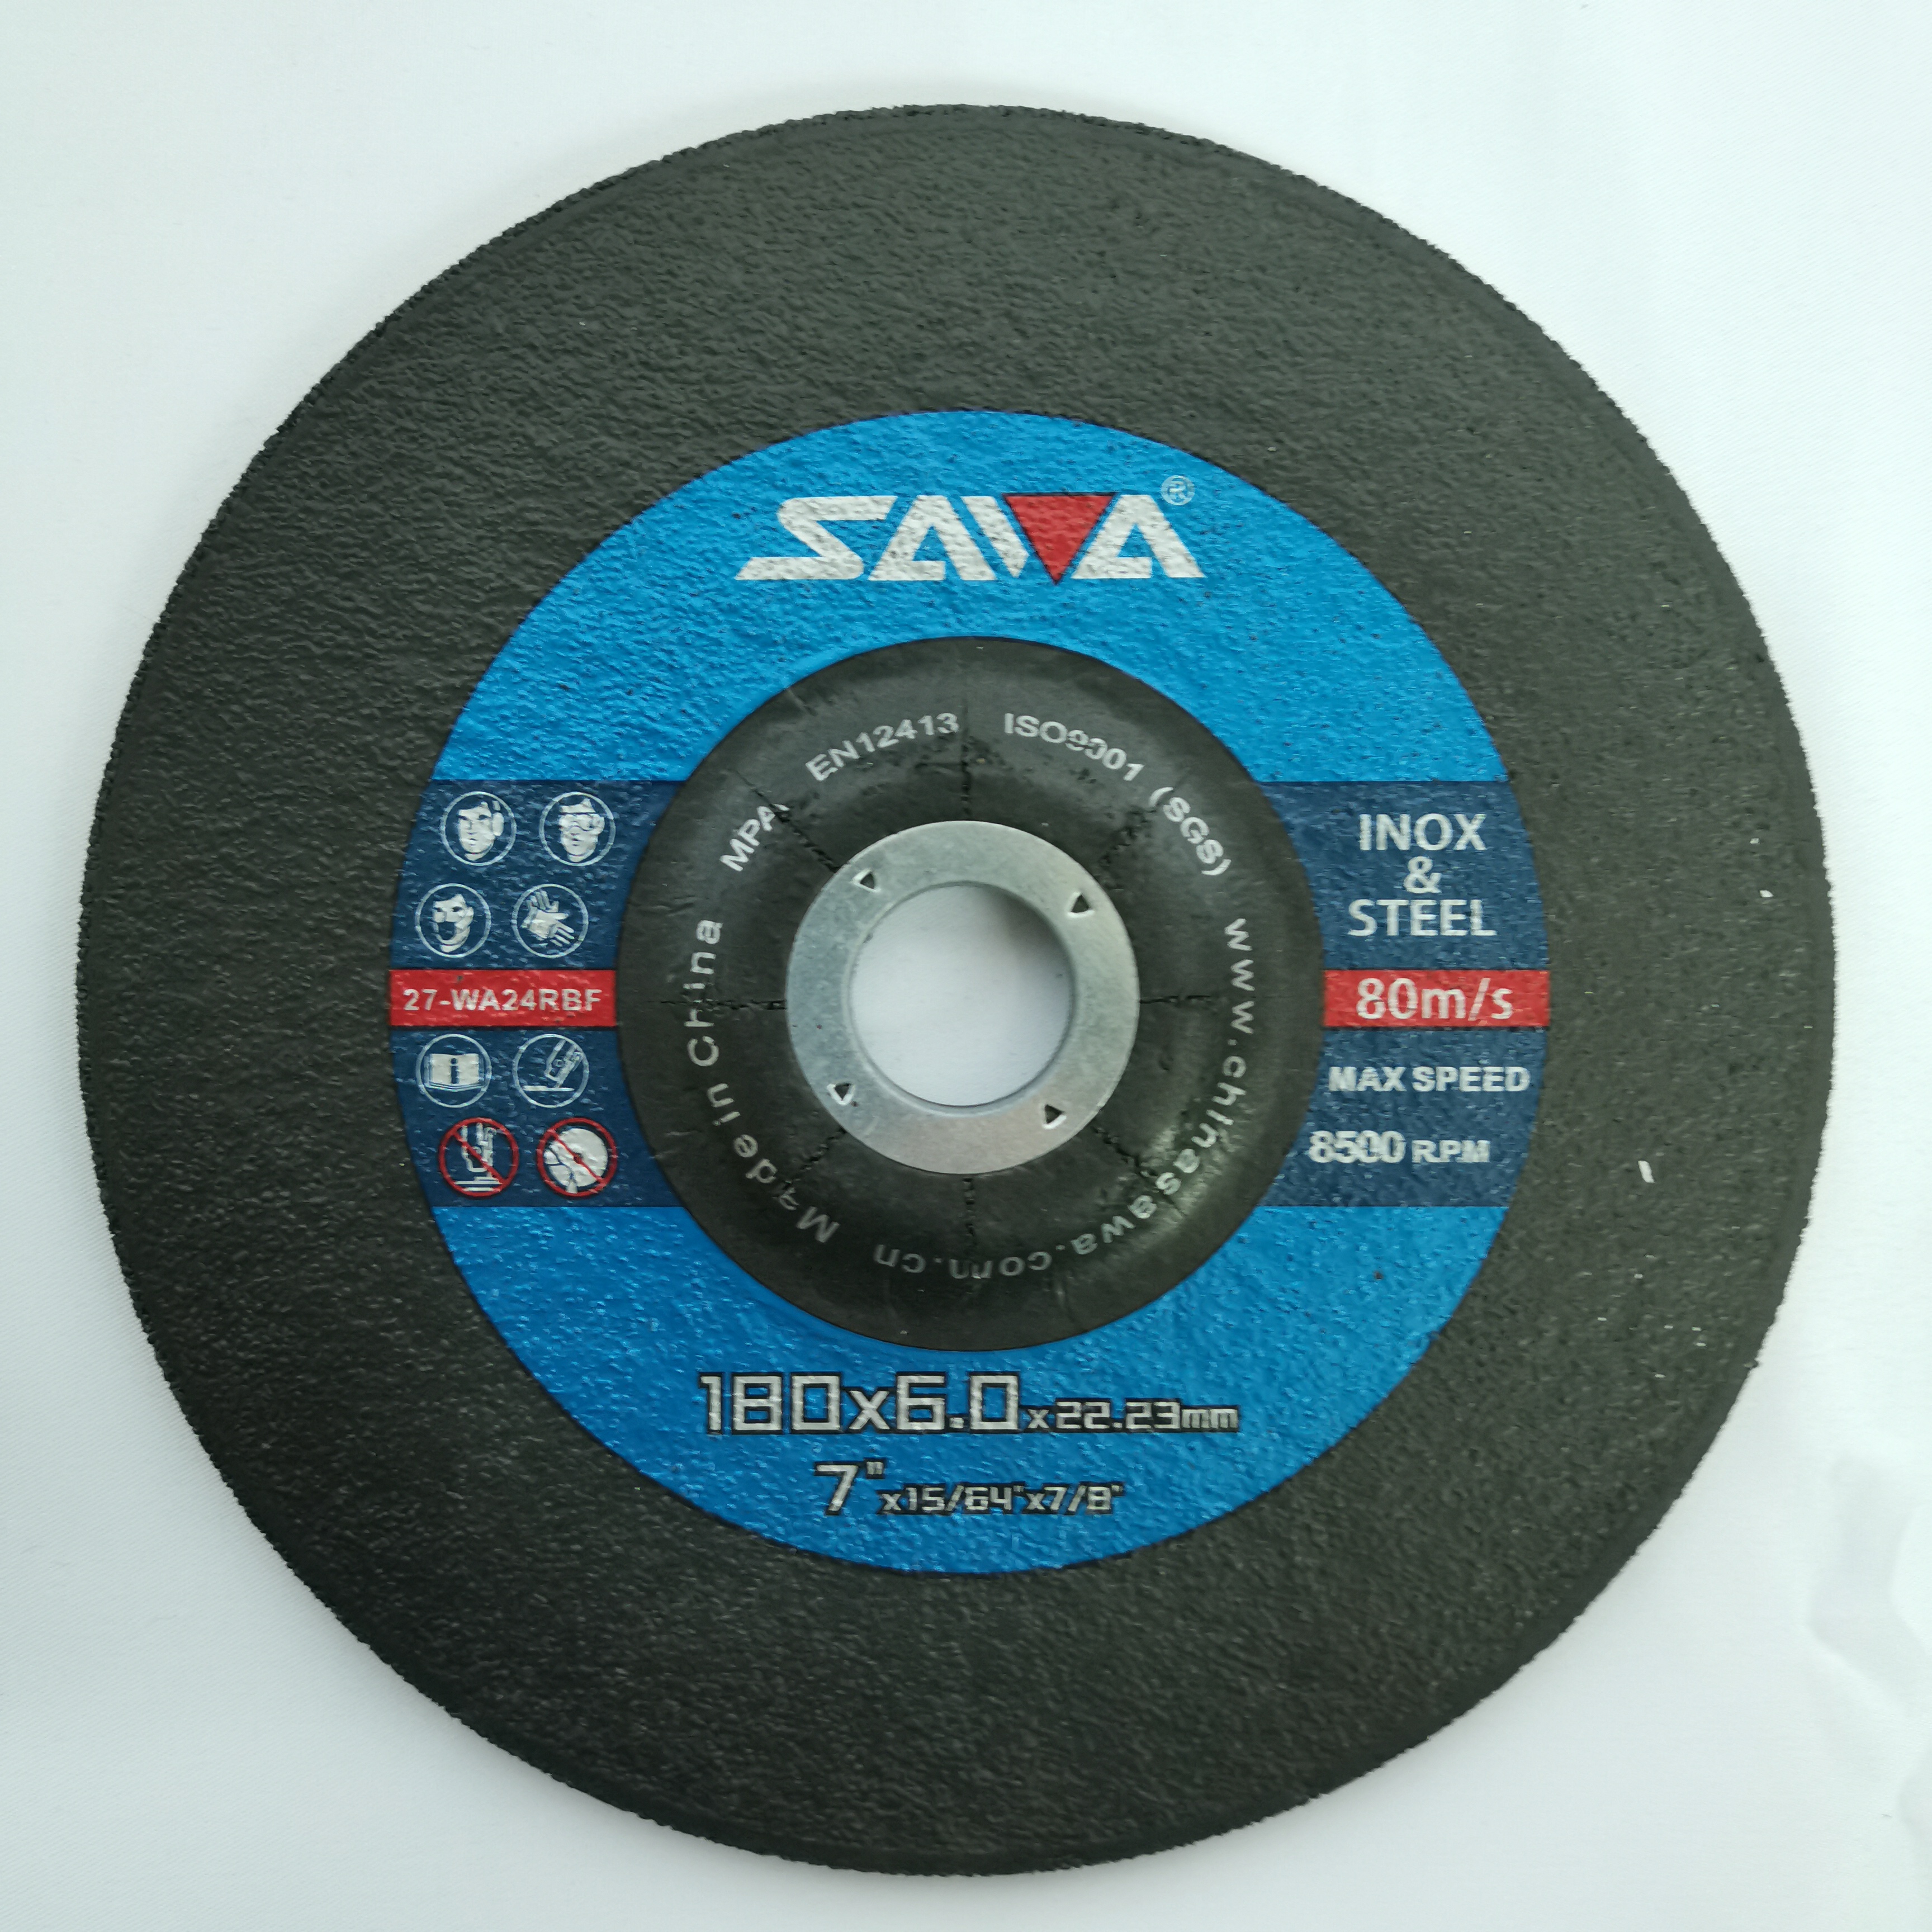 SAWA 180x6x22mm 7 inch metal grinding wheel